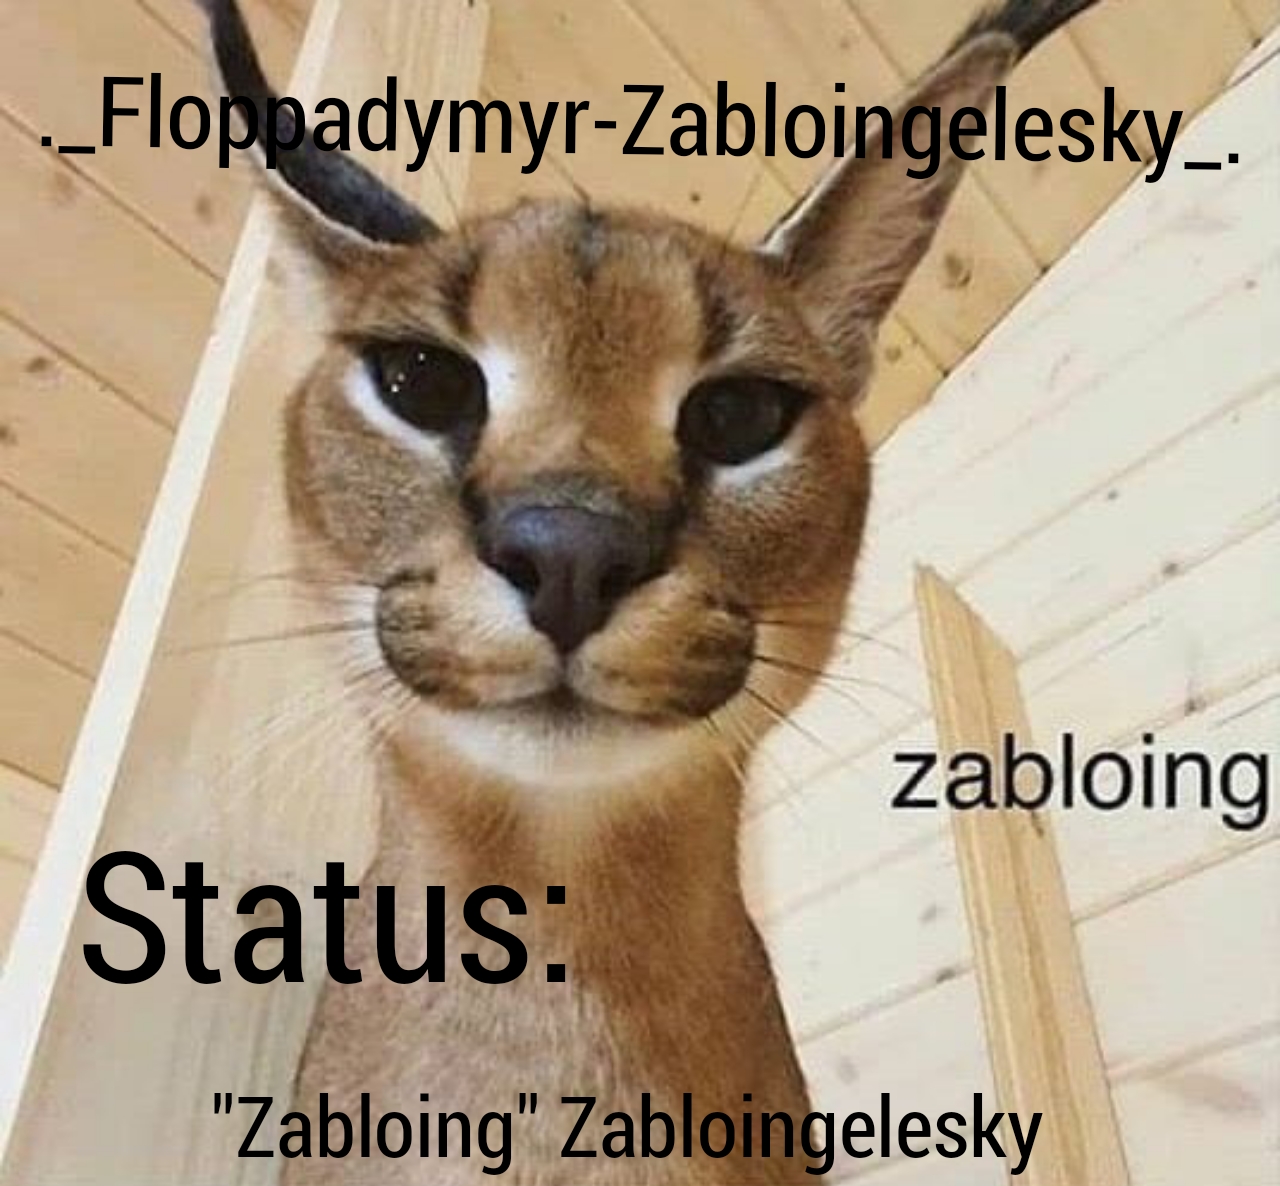 High Quality Zabloingelesky's Annoucment temp Blank Meme Template